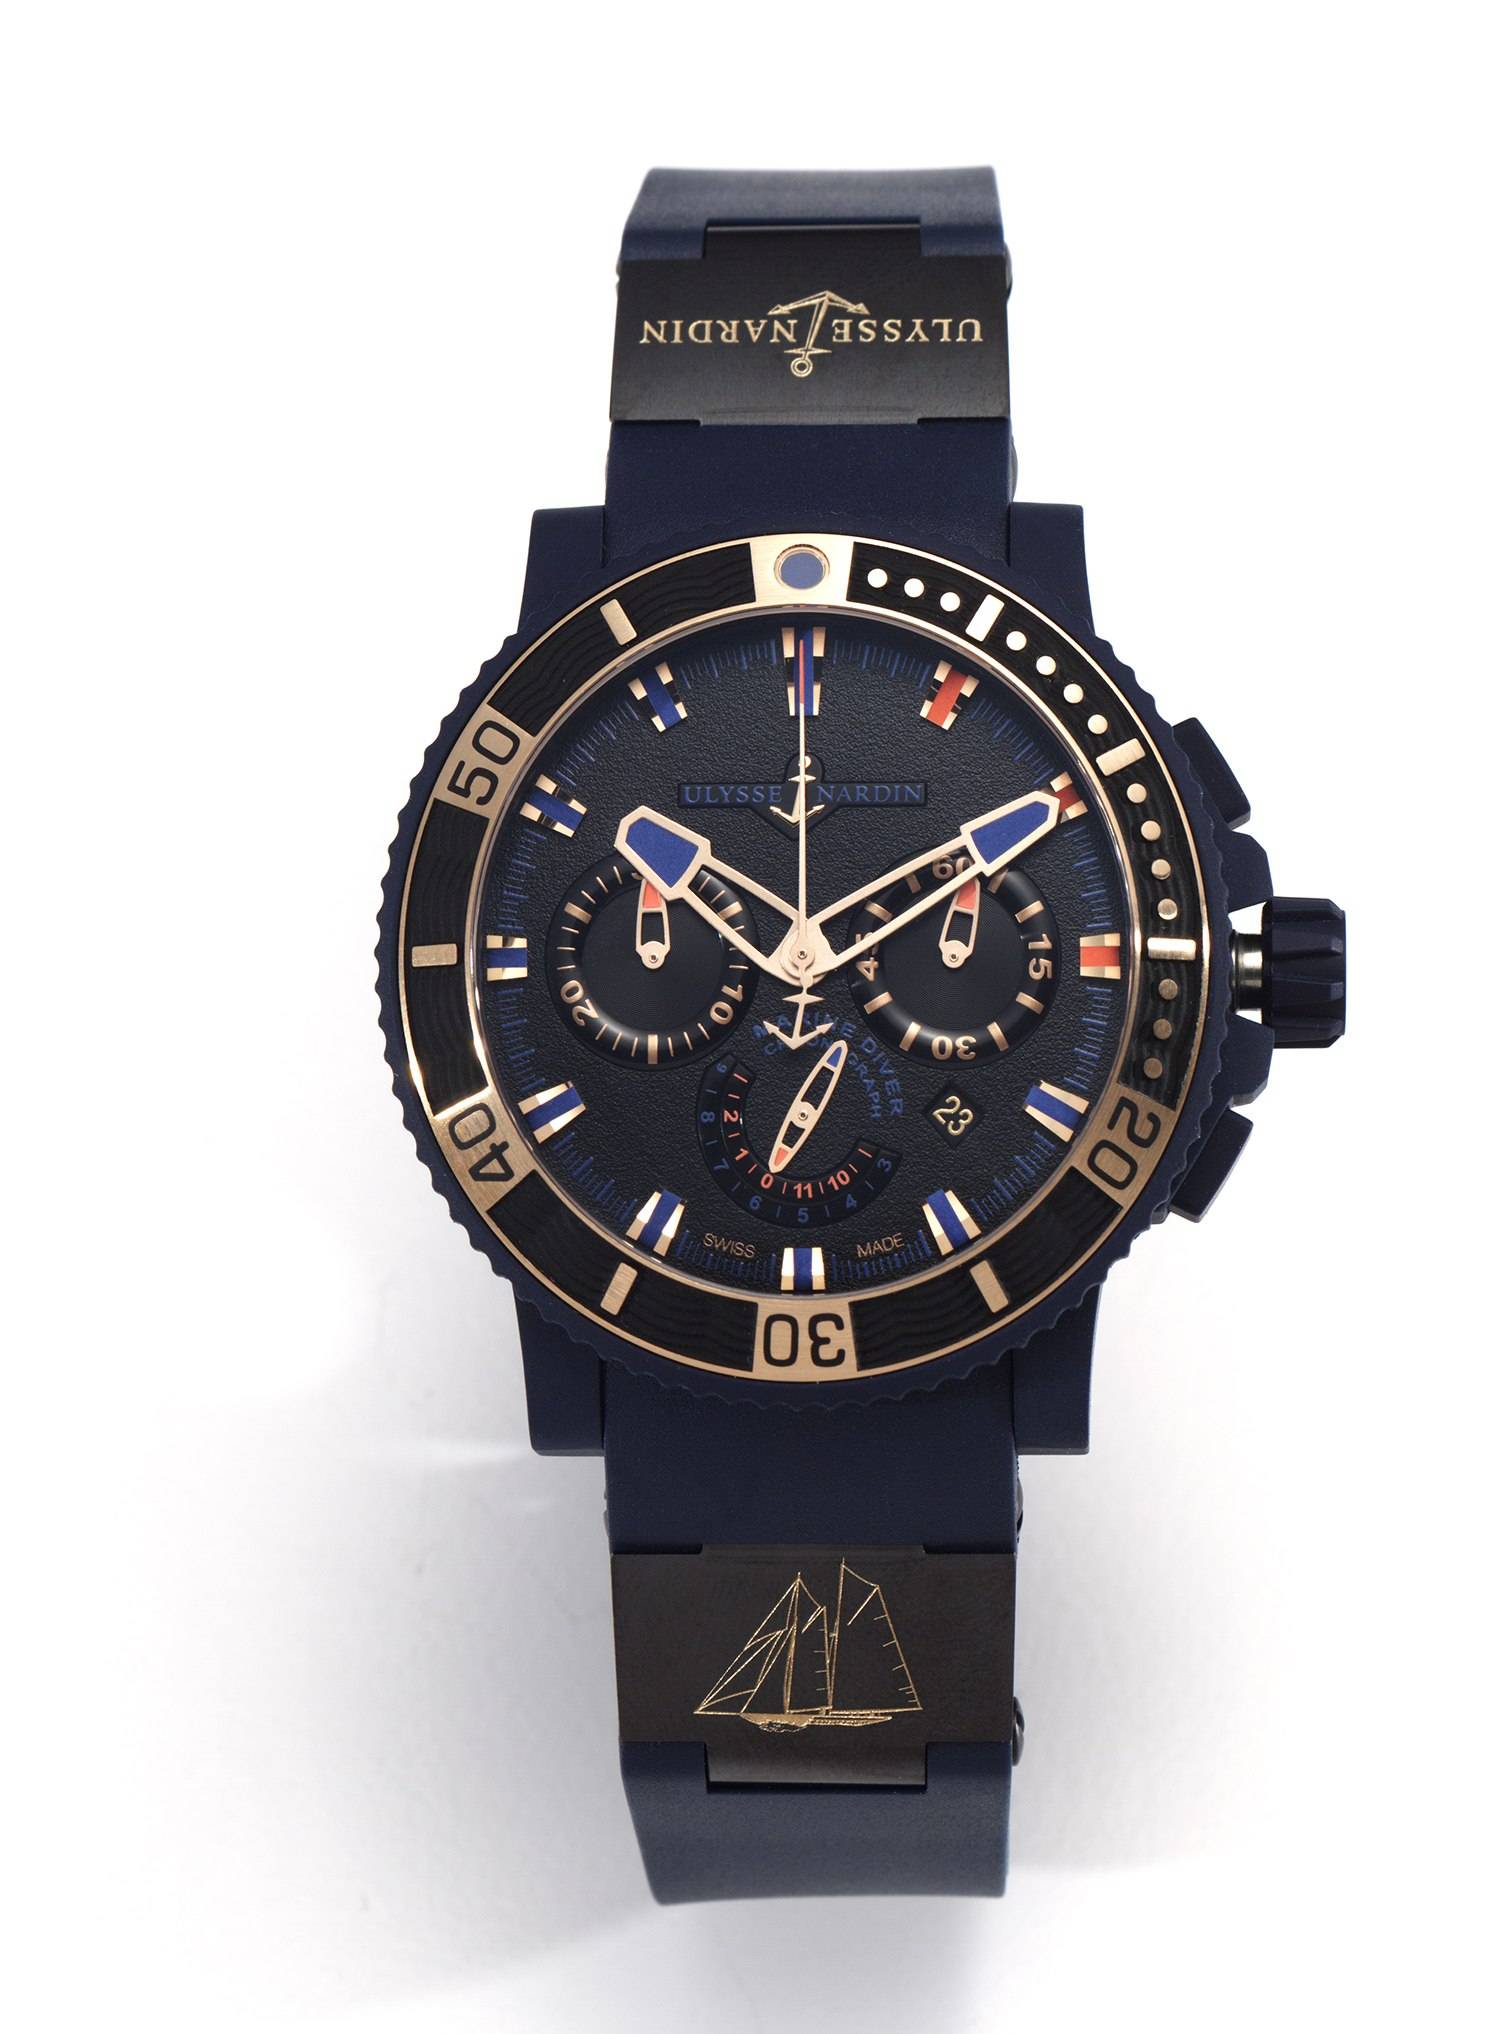 Ulysse Nardin To Unveil Limited Edition Schooner Timepiece At Ferretti Group Fête